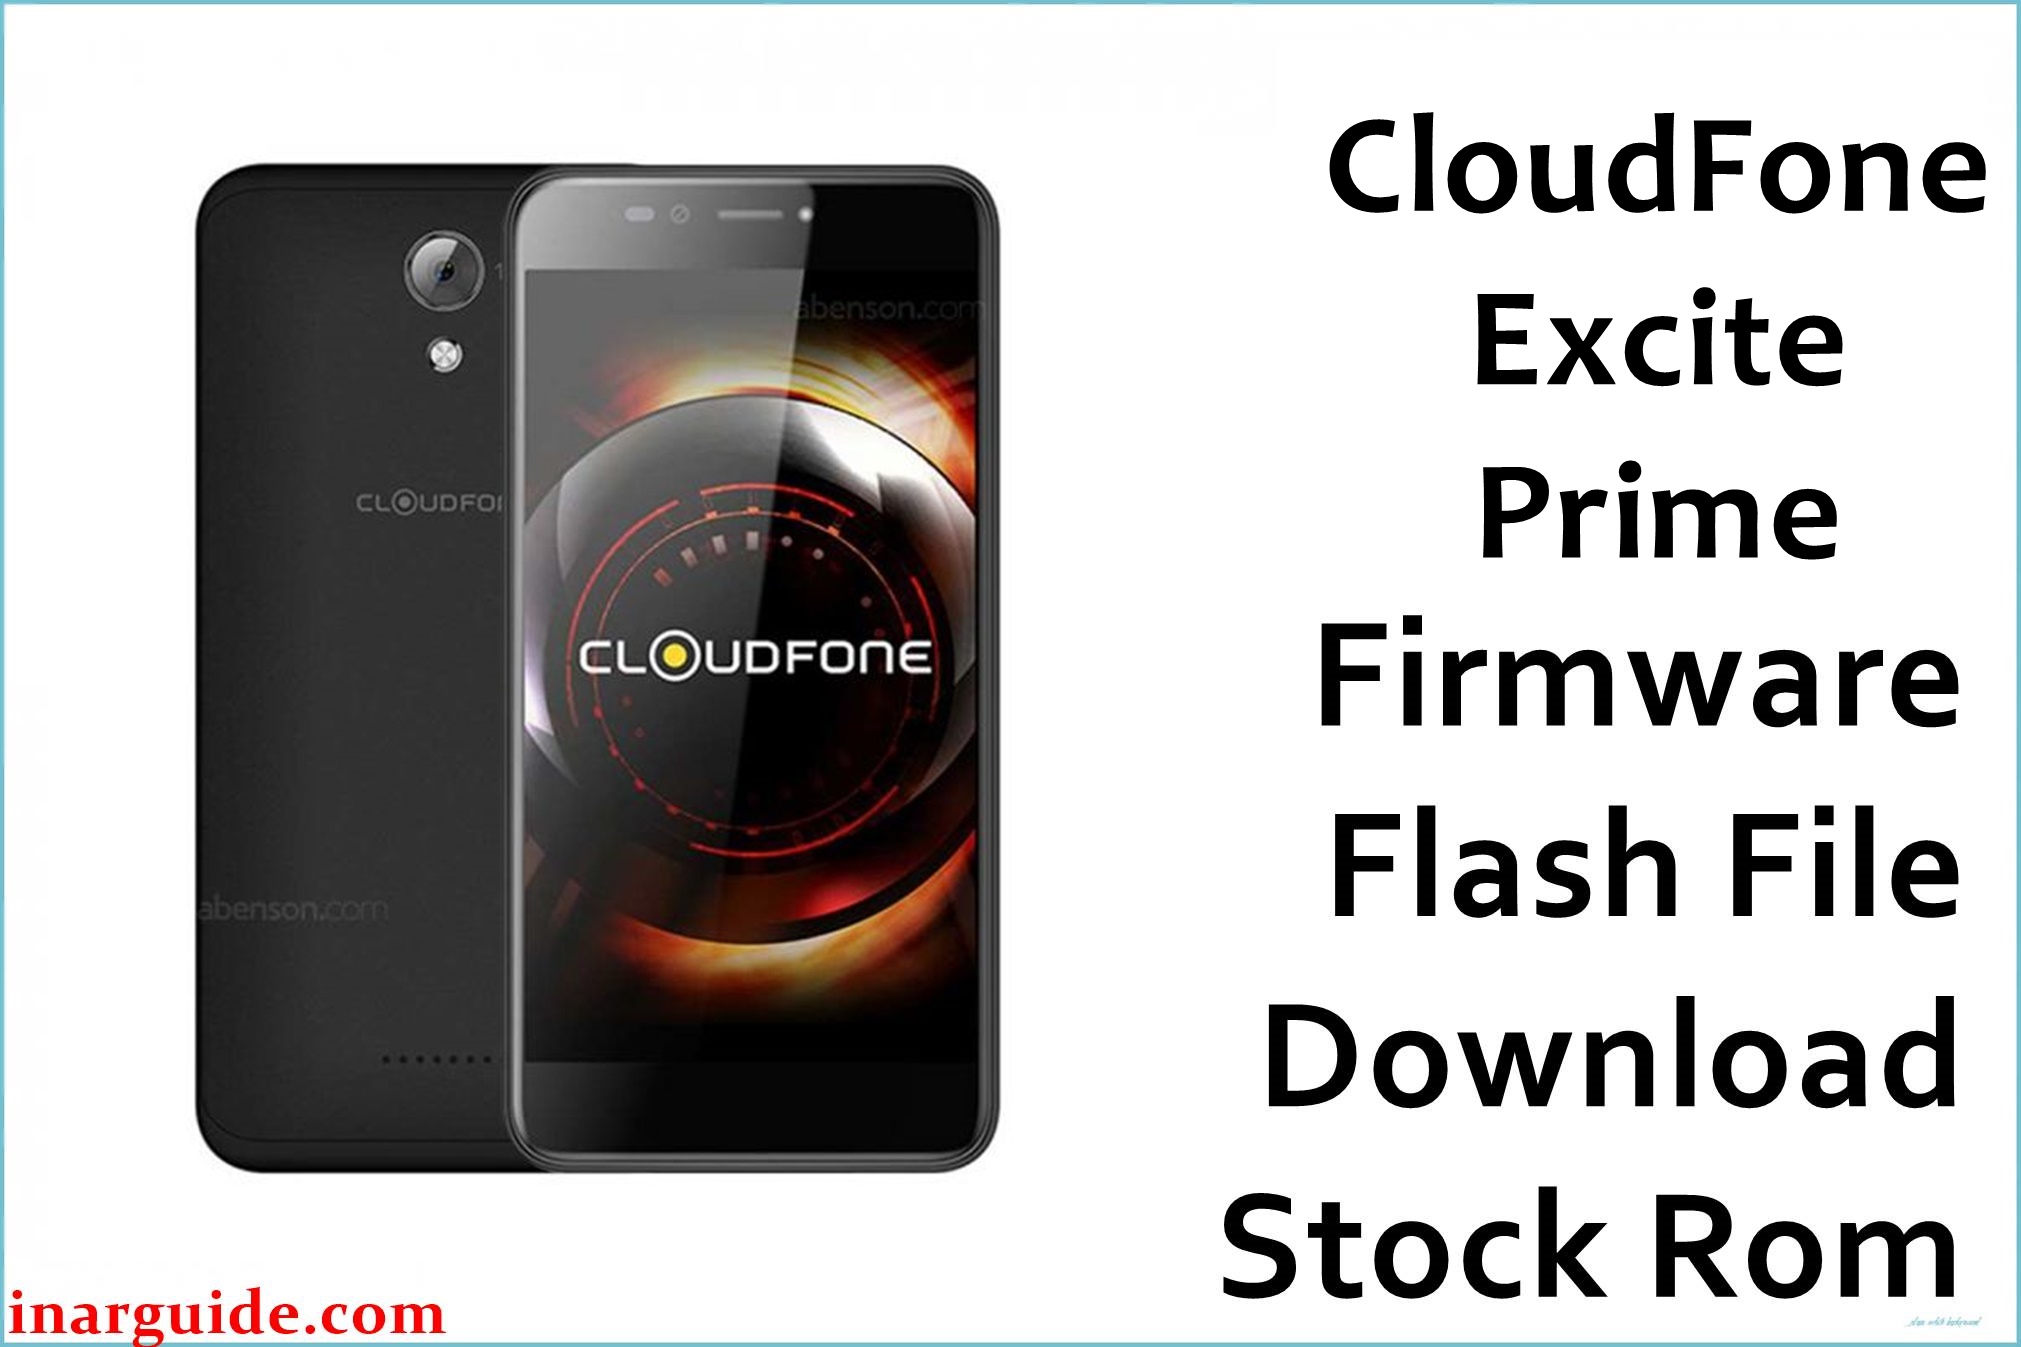 CloudFone Excite Prime